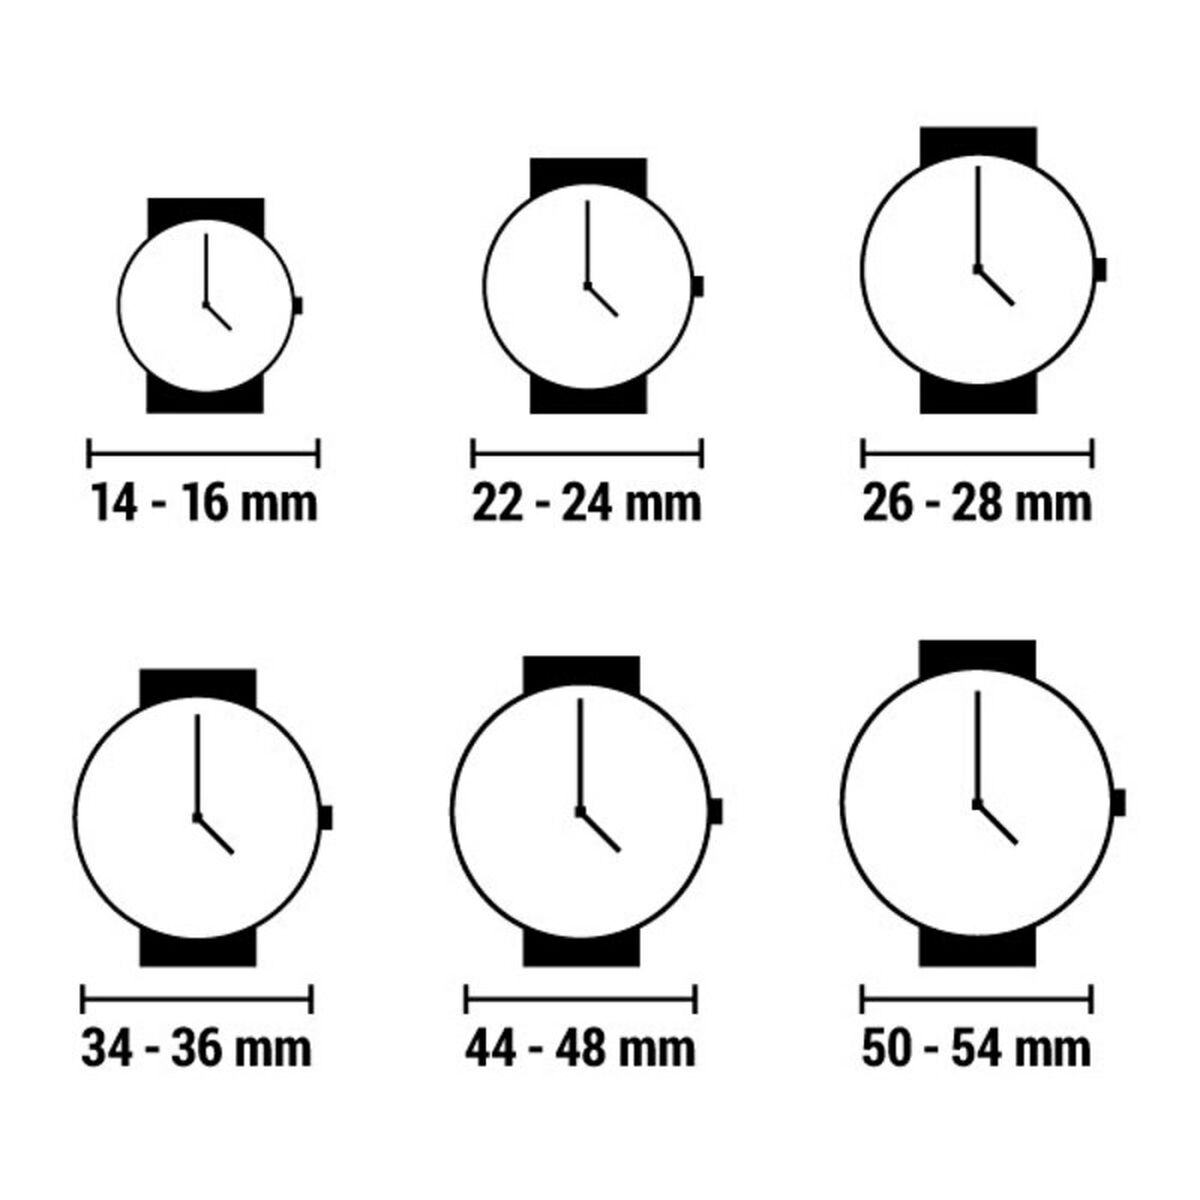 Horloge Dames XTRESS XAA1038-53 (Ø 34 mm)